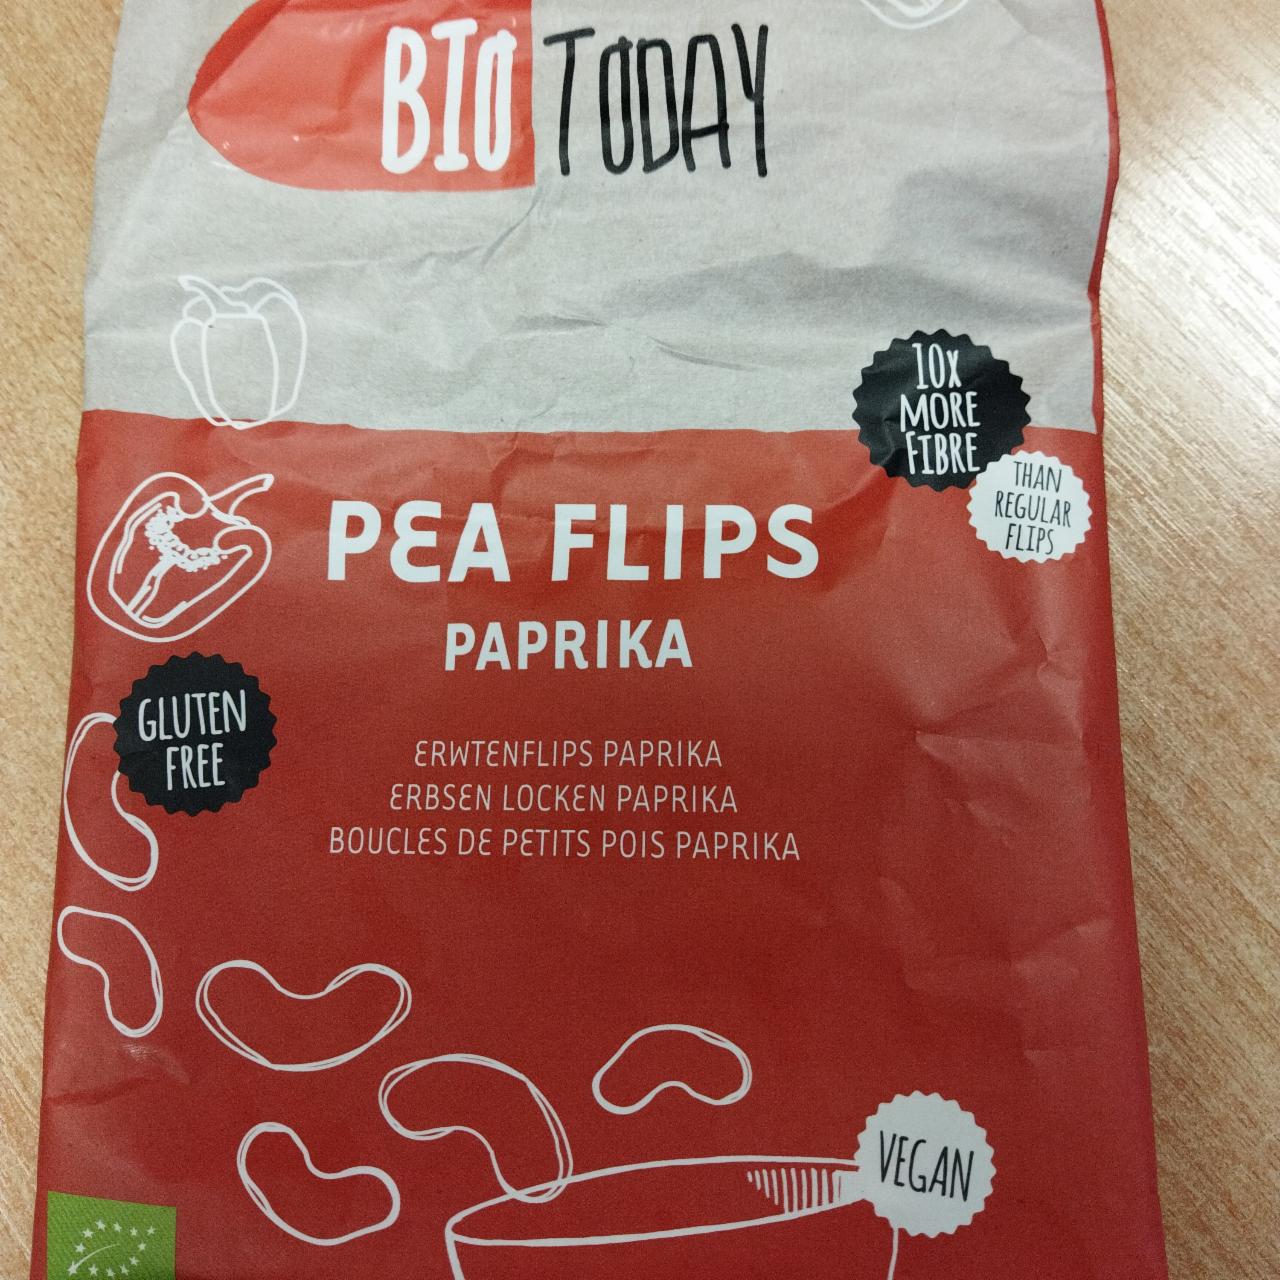 Fotografie - Pea flips Paprika BioToday